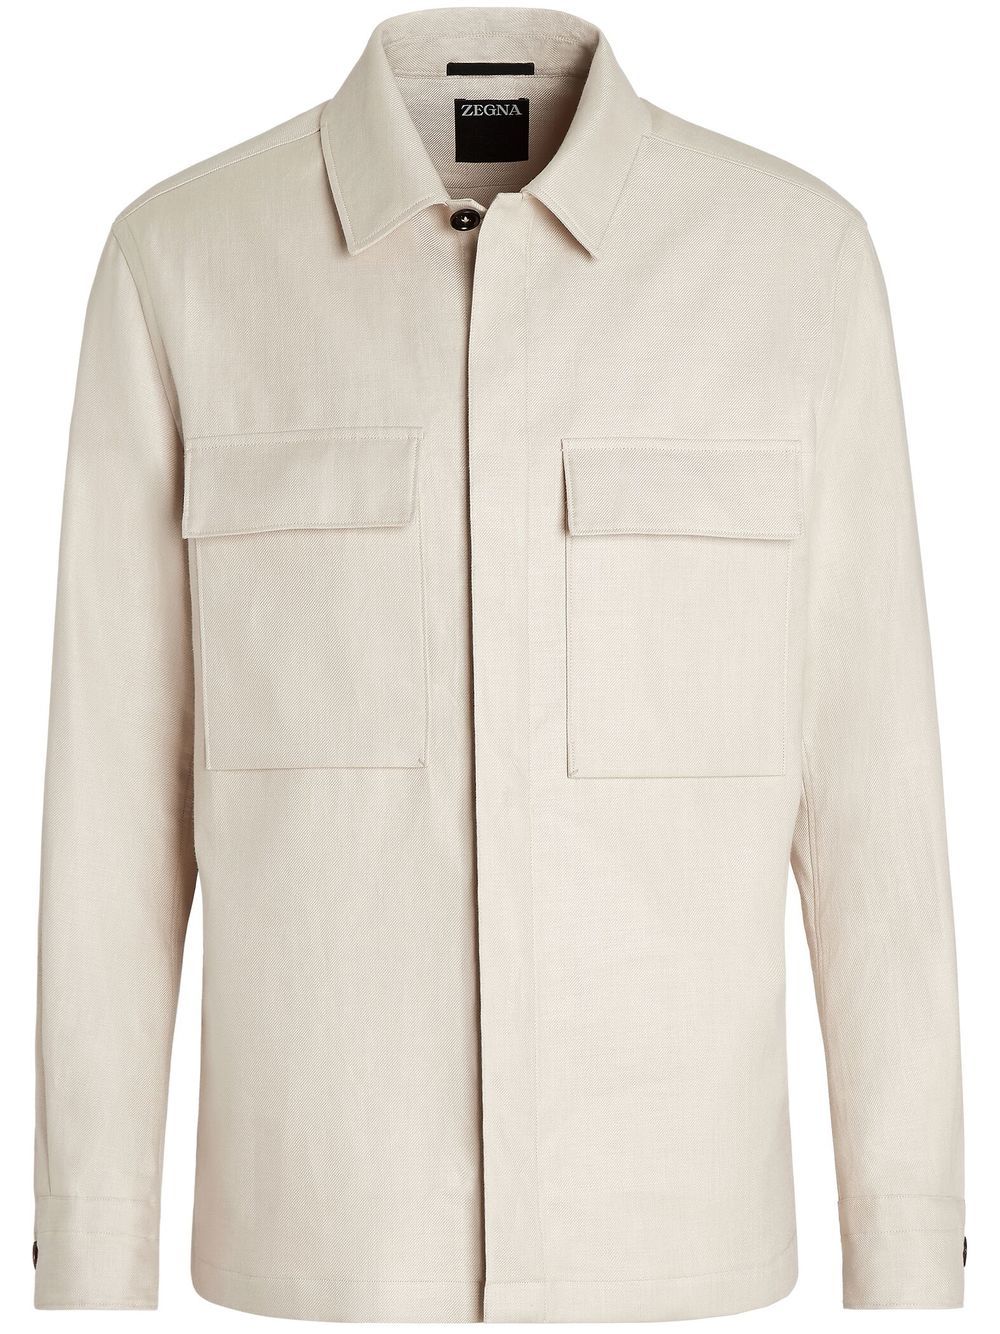 Image 1 of Zegna Pure Linen overshirt